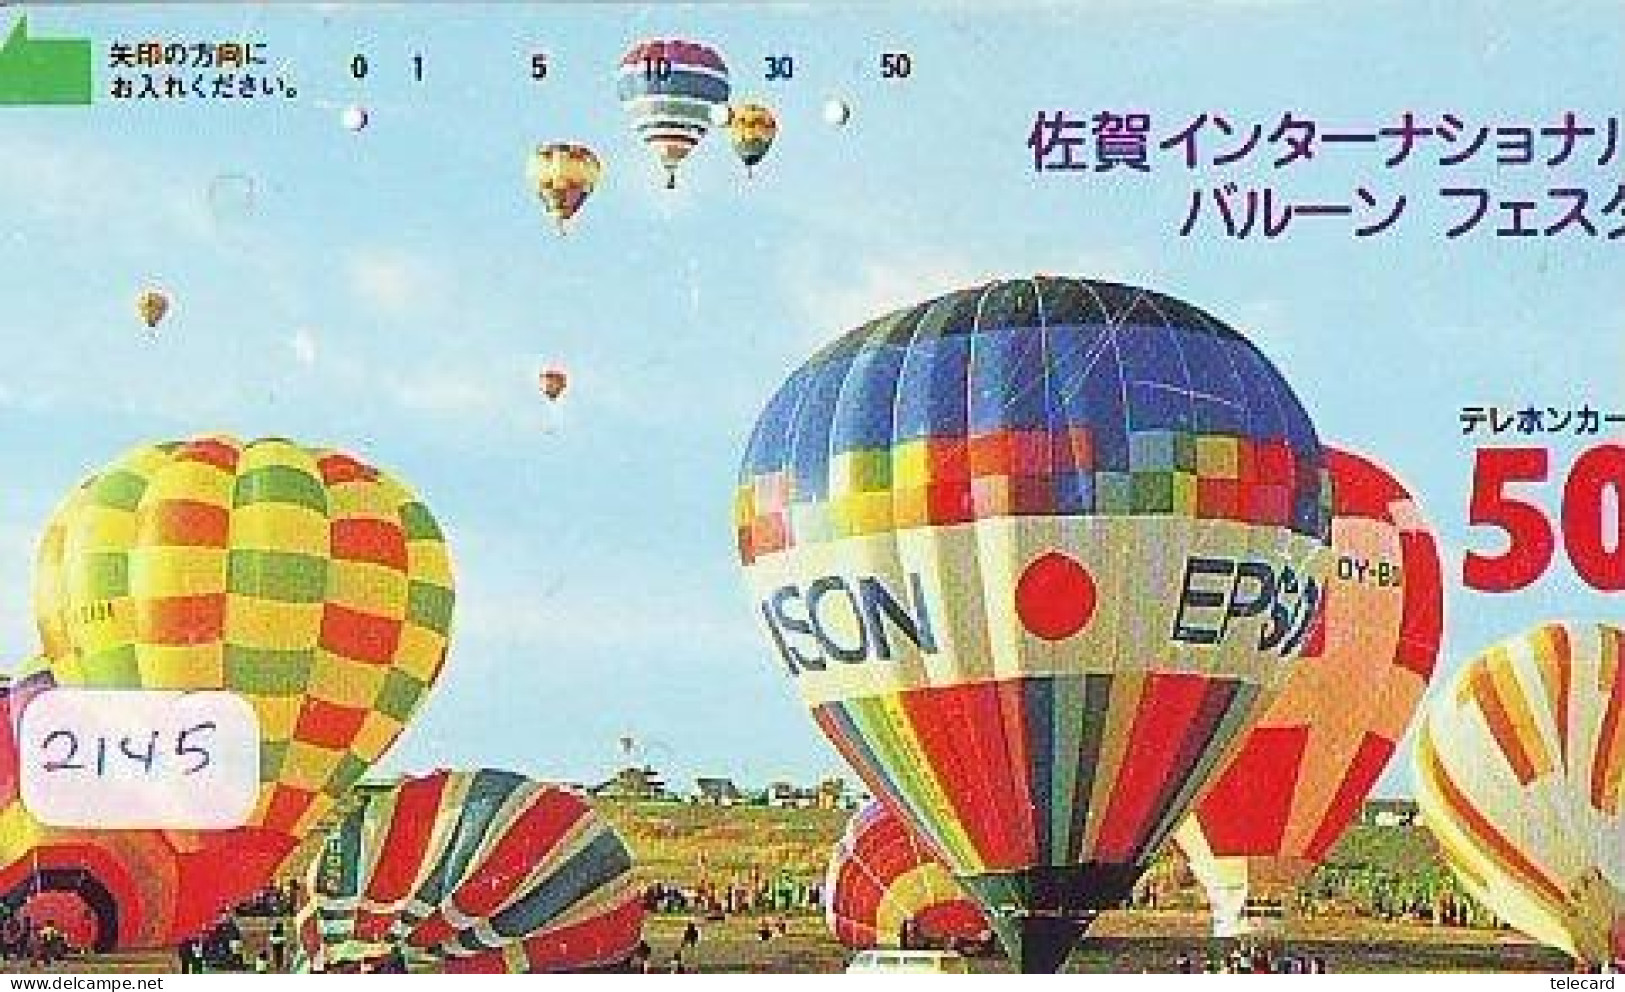 Telecarte JAPON * (2145) BALLON * MONTGOLFIERE - Hot Air Balloon * Aerostato * Heißluft PHONECARD JAPAN - - Deportes